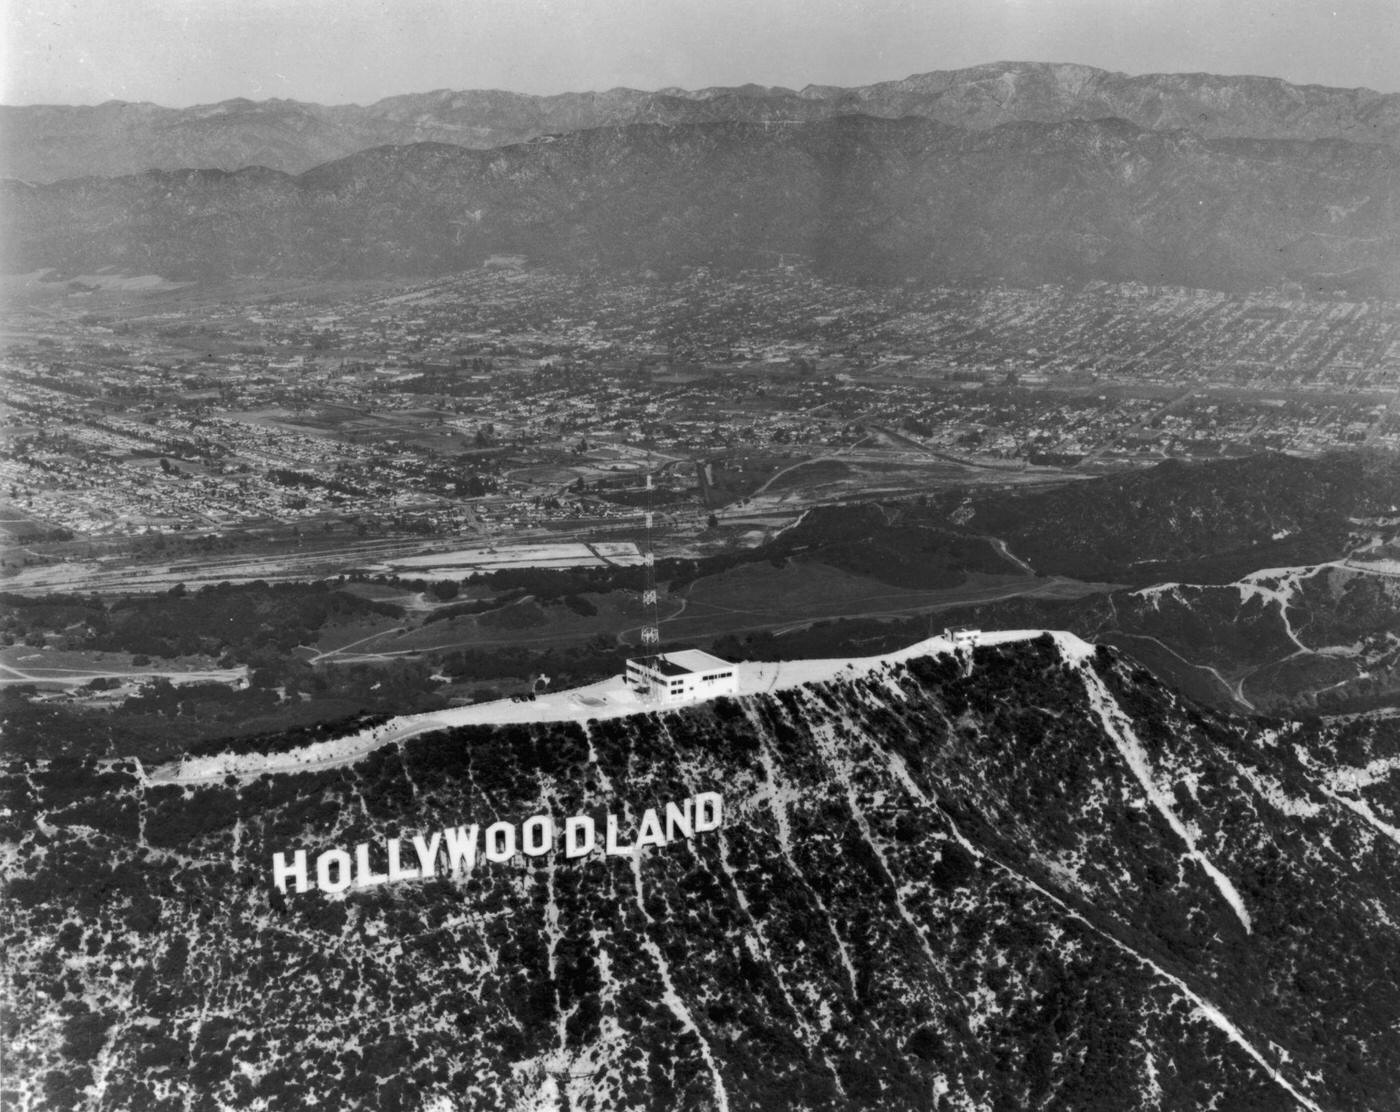 Hollywood sign, Hollywood, California - 1935.